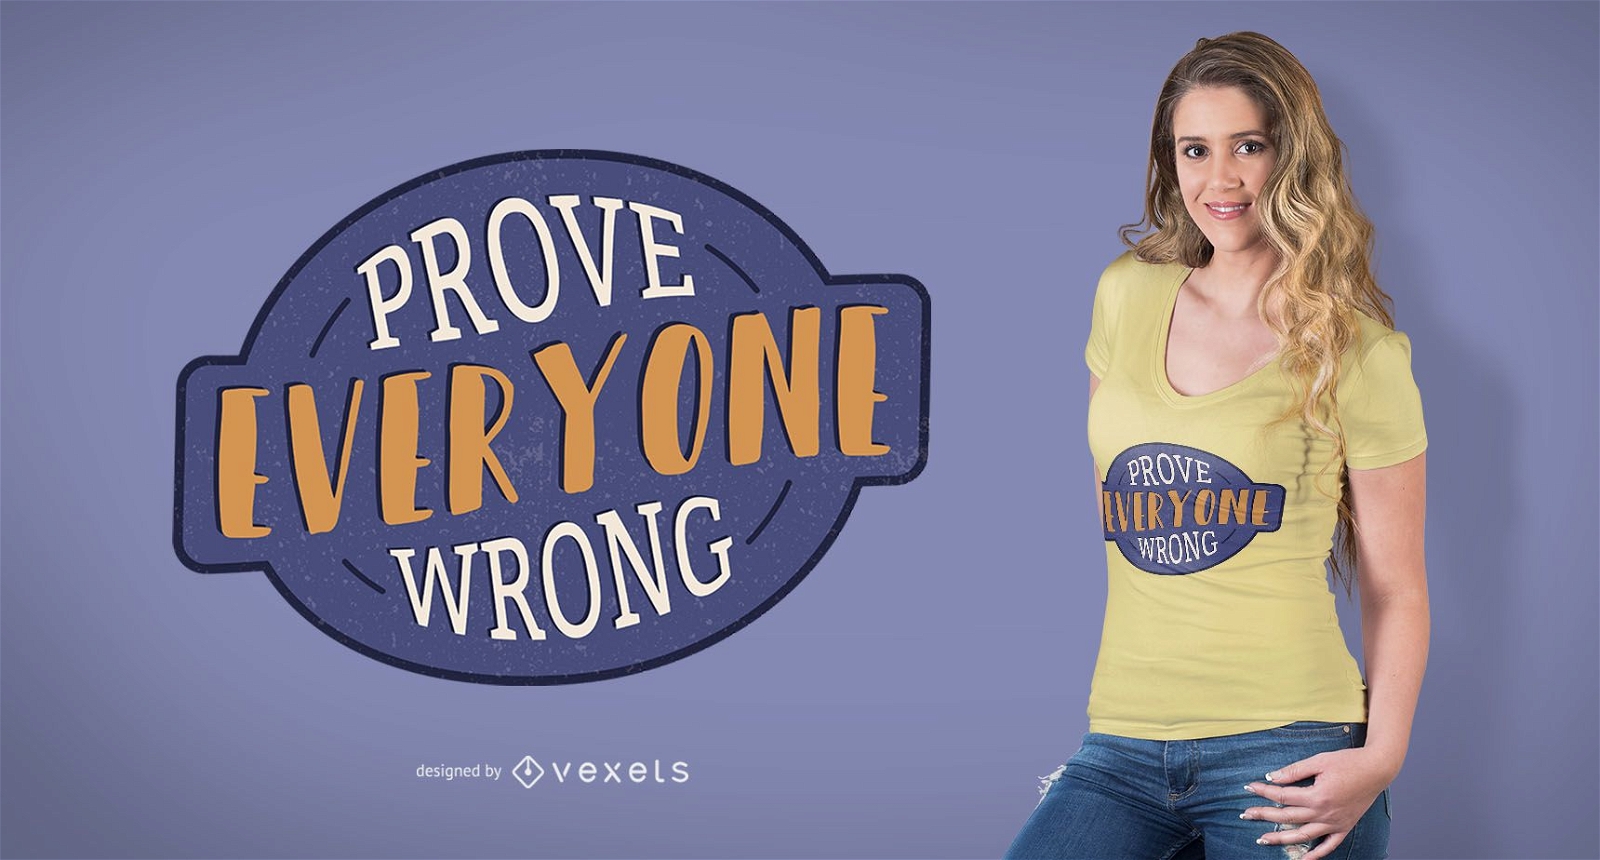 Prove everyone wrong t-shirt design